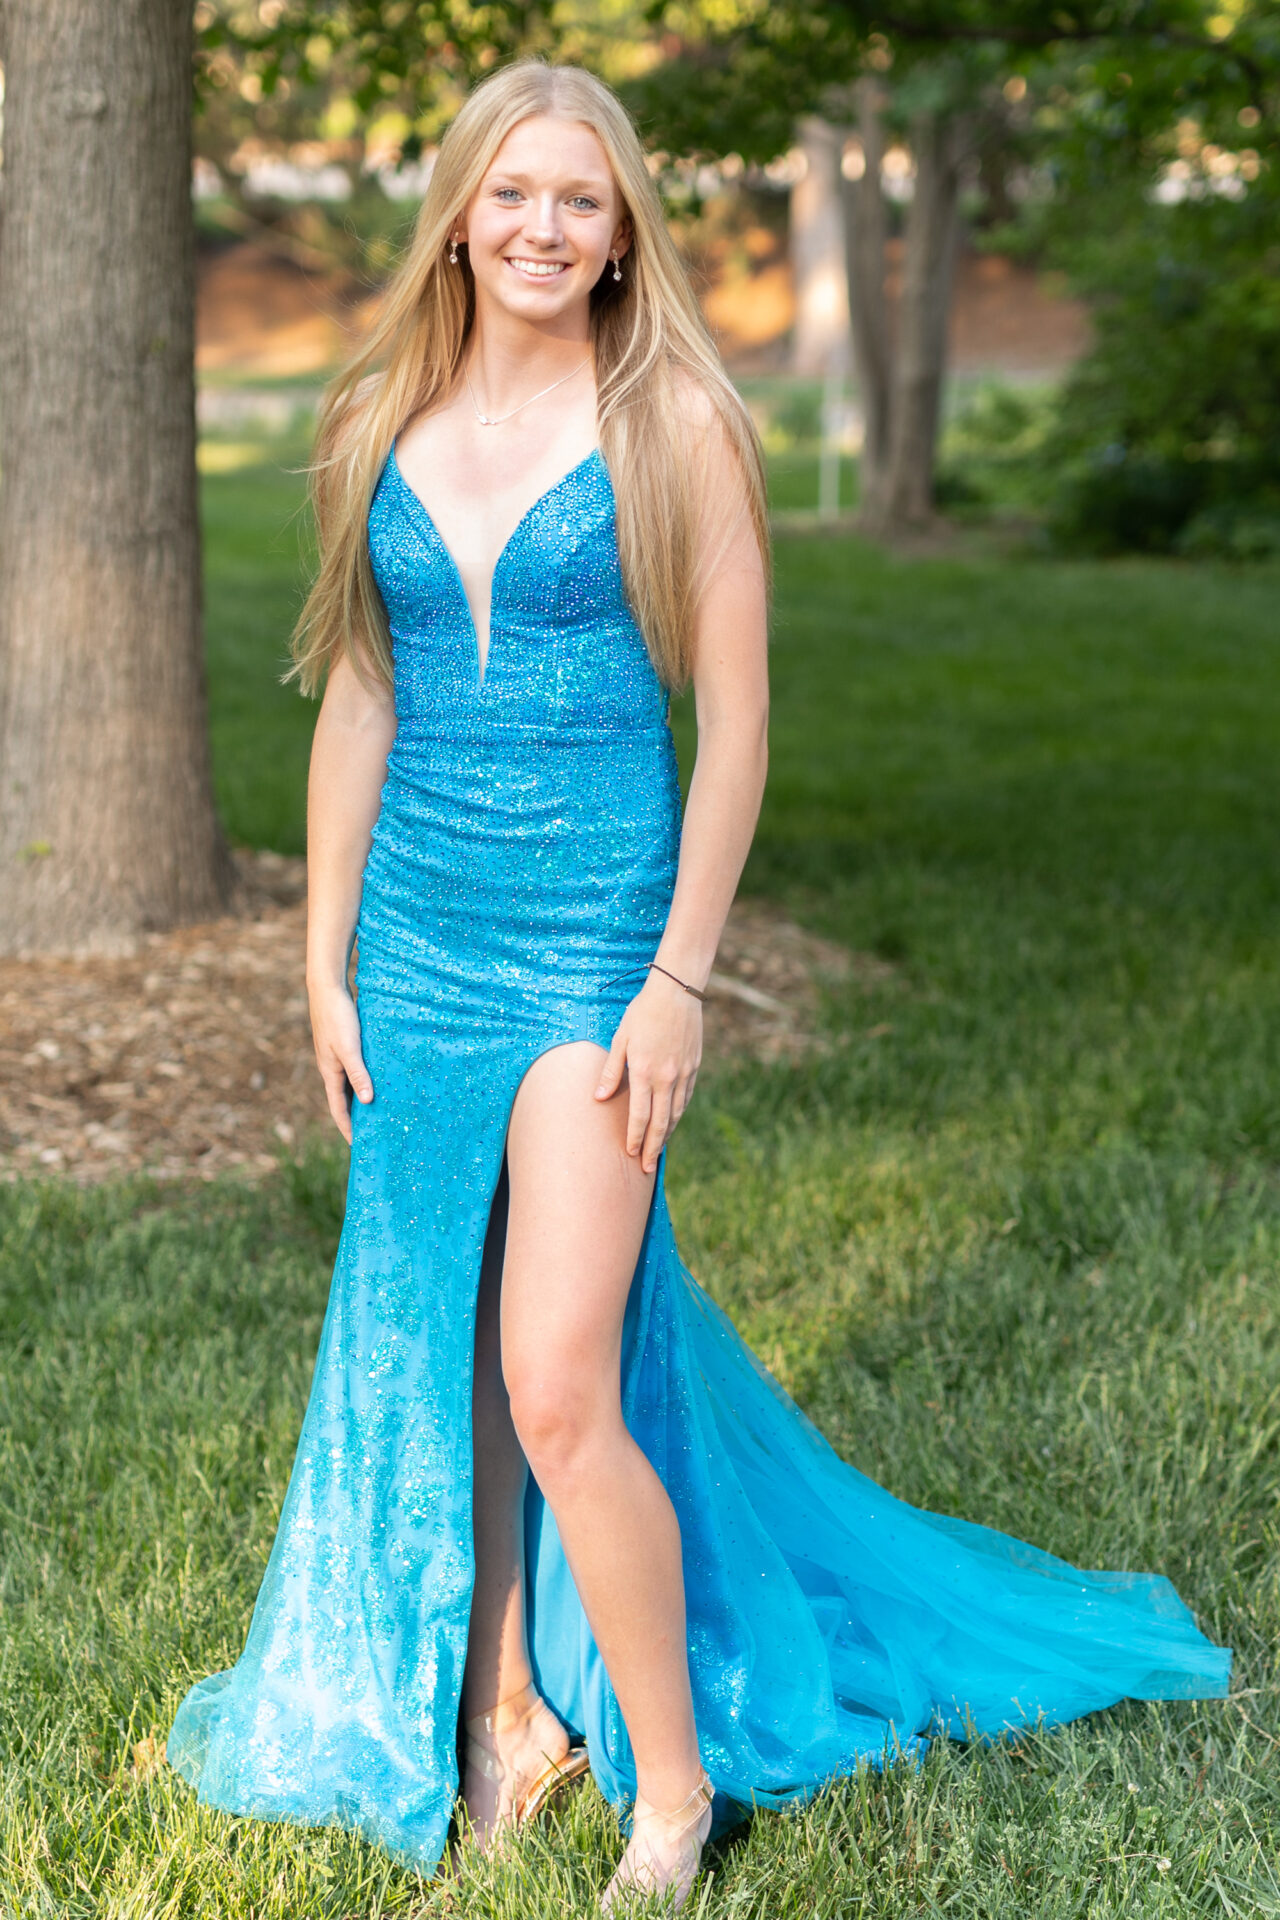 Blonde girl in long blue dress